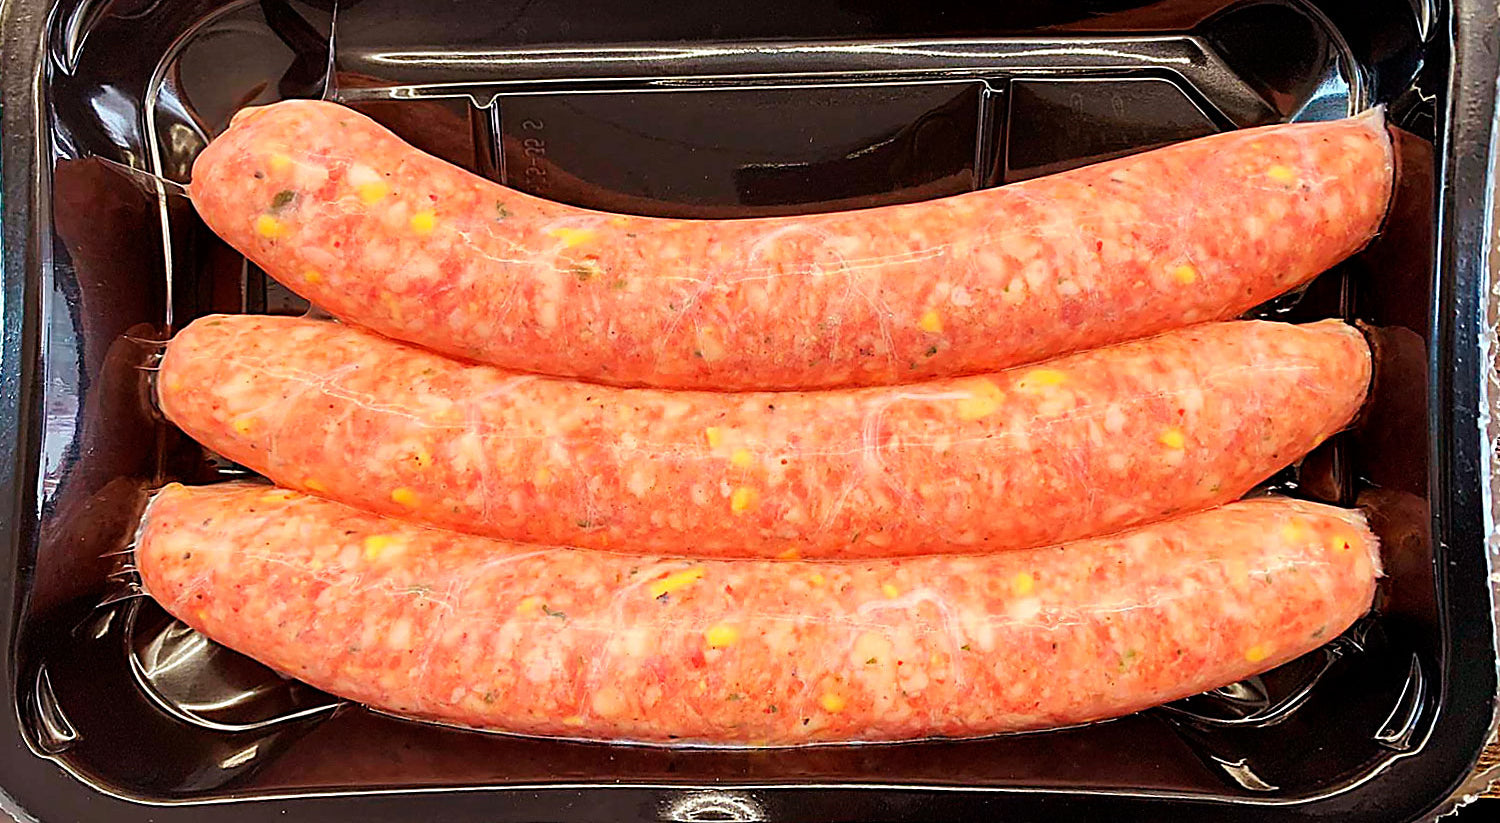 Cheddar Jalapeno Pork Sausage skin packed